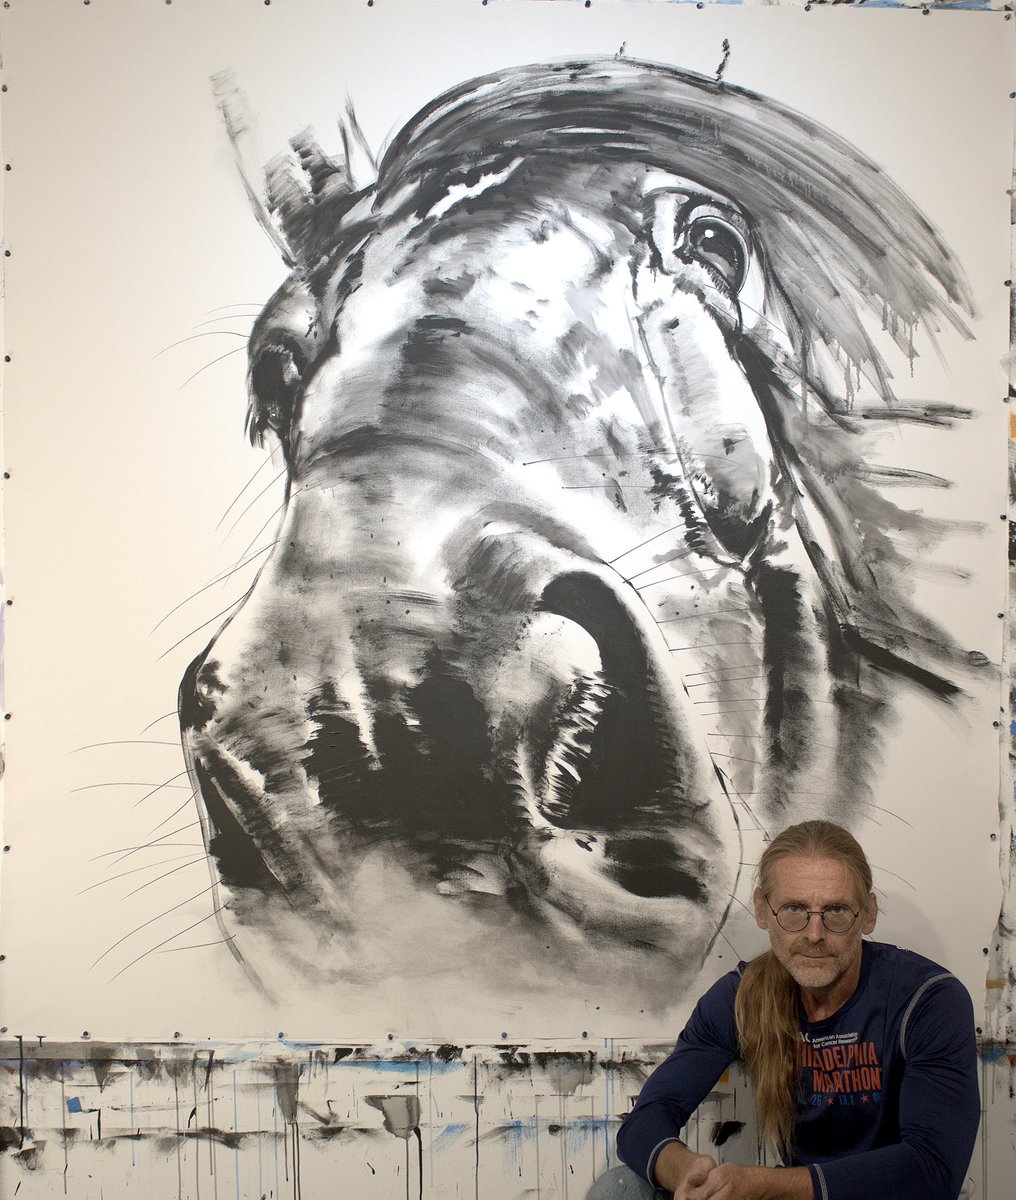 'Lakota” 73 x 70 inch ink and acrylic on canvas.
Available on my website.
#ink #inked #inkedart #inkdrawing #drawing #drawings #painting #paintings #horses #equestrian #horseart #equineart #horse #equine #art #artist #artists #artwork #contemporaryart #animals #animalart…